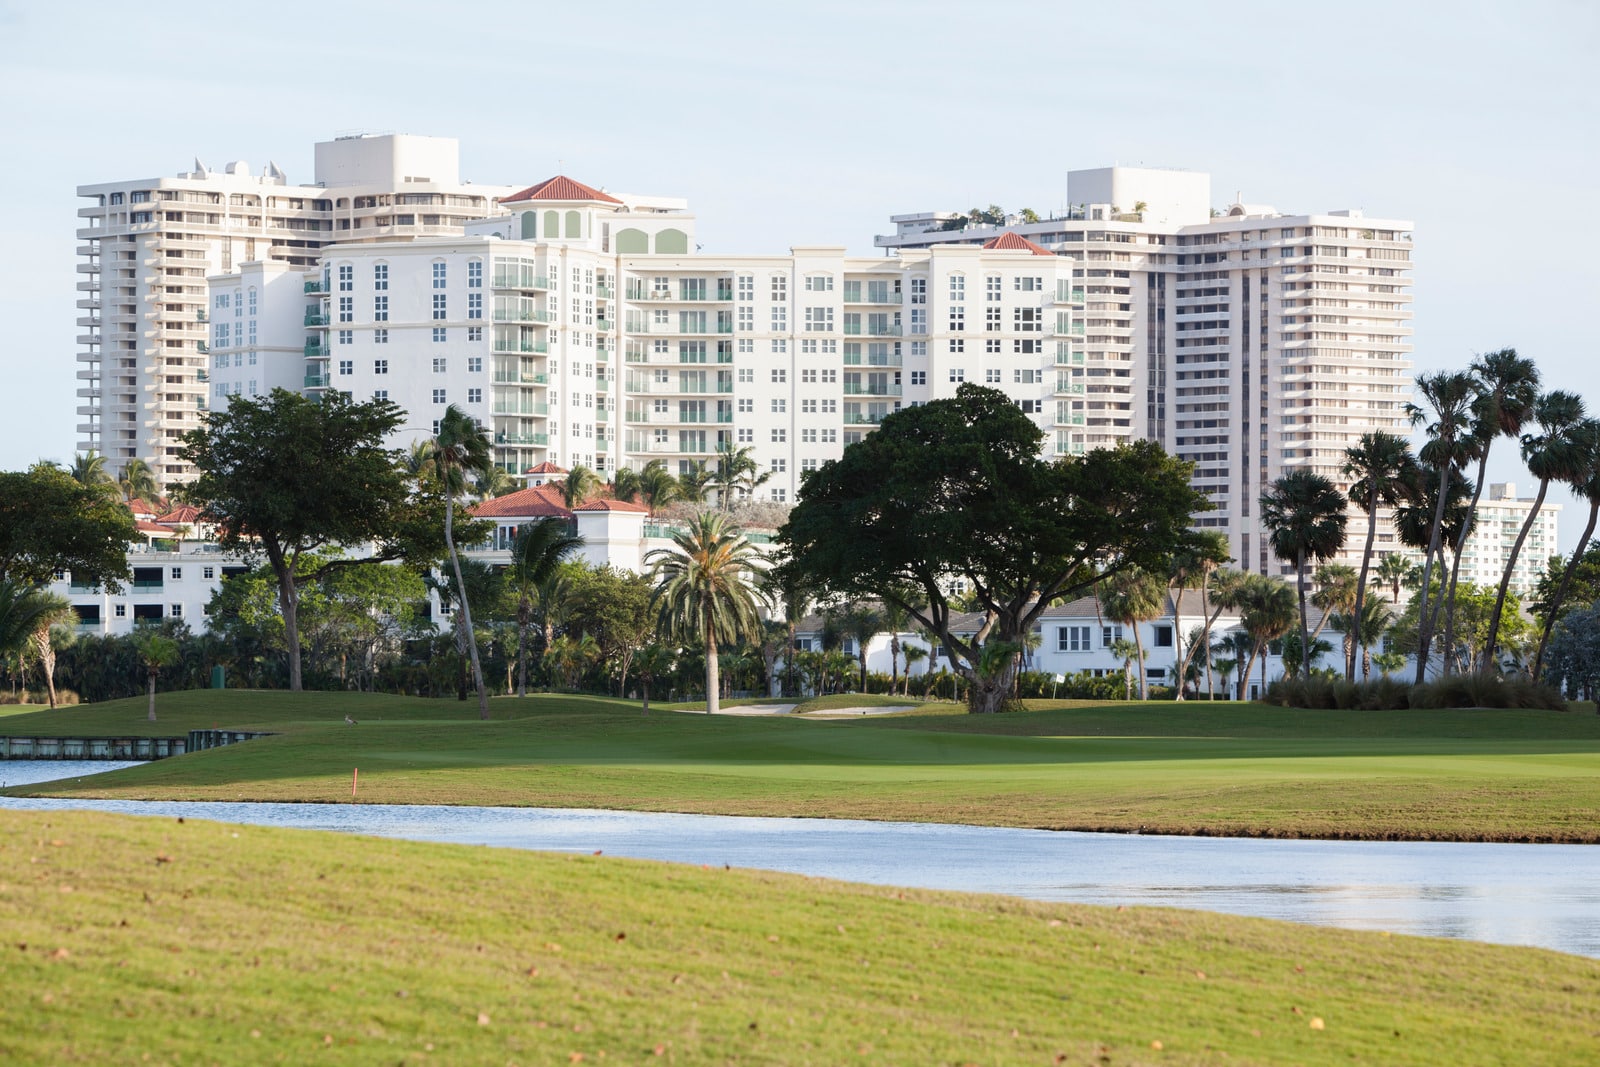 This image shows Aventura, a suburb located in Miami, Florida.